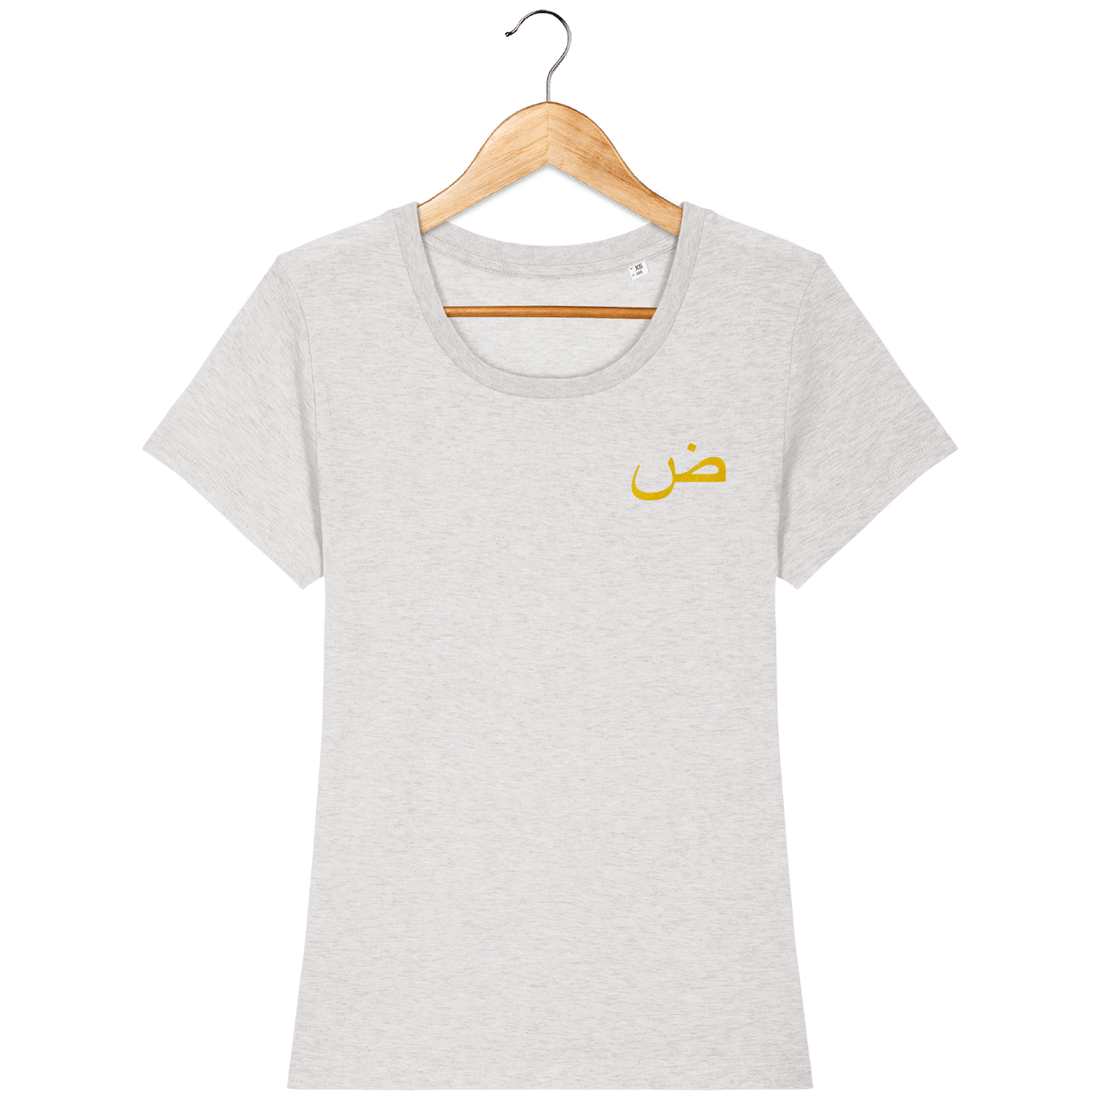 Femme>Tee-shirts - T-Shirt Femme <br> Lettre Arabe Daad